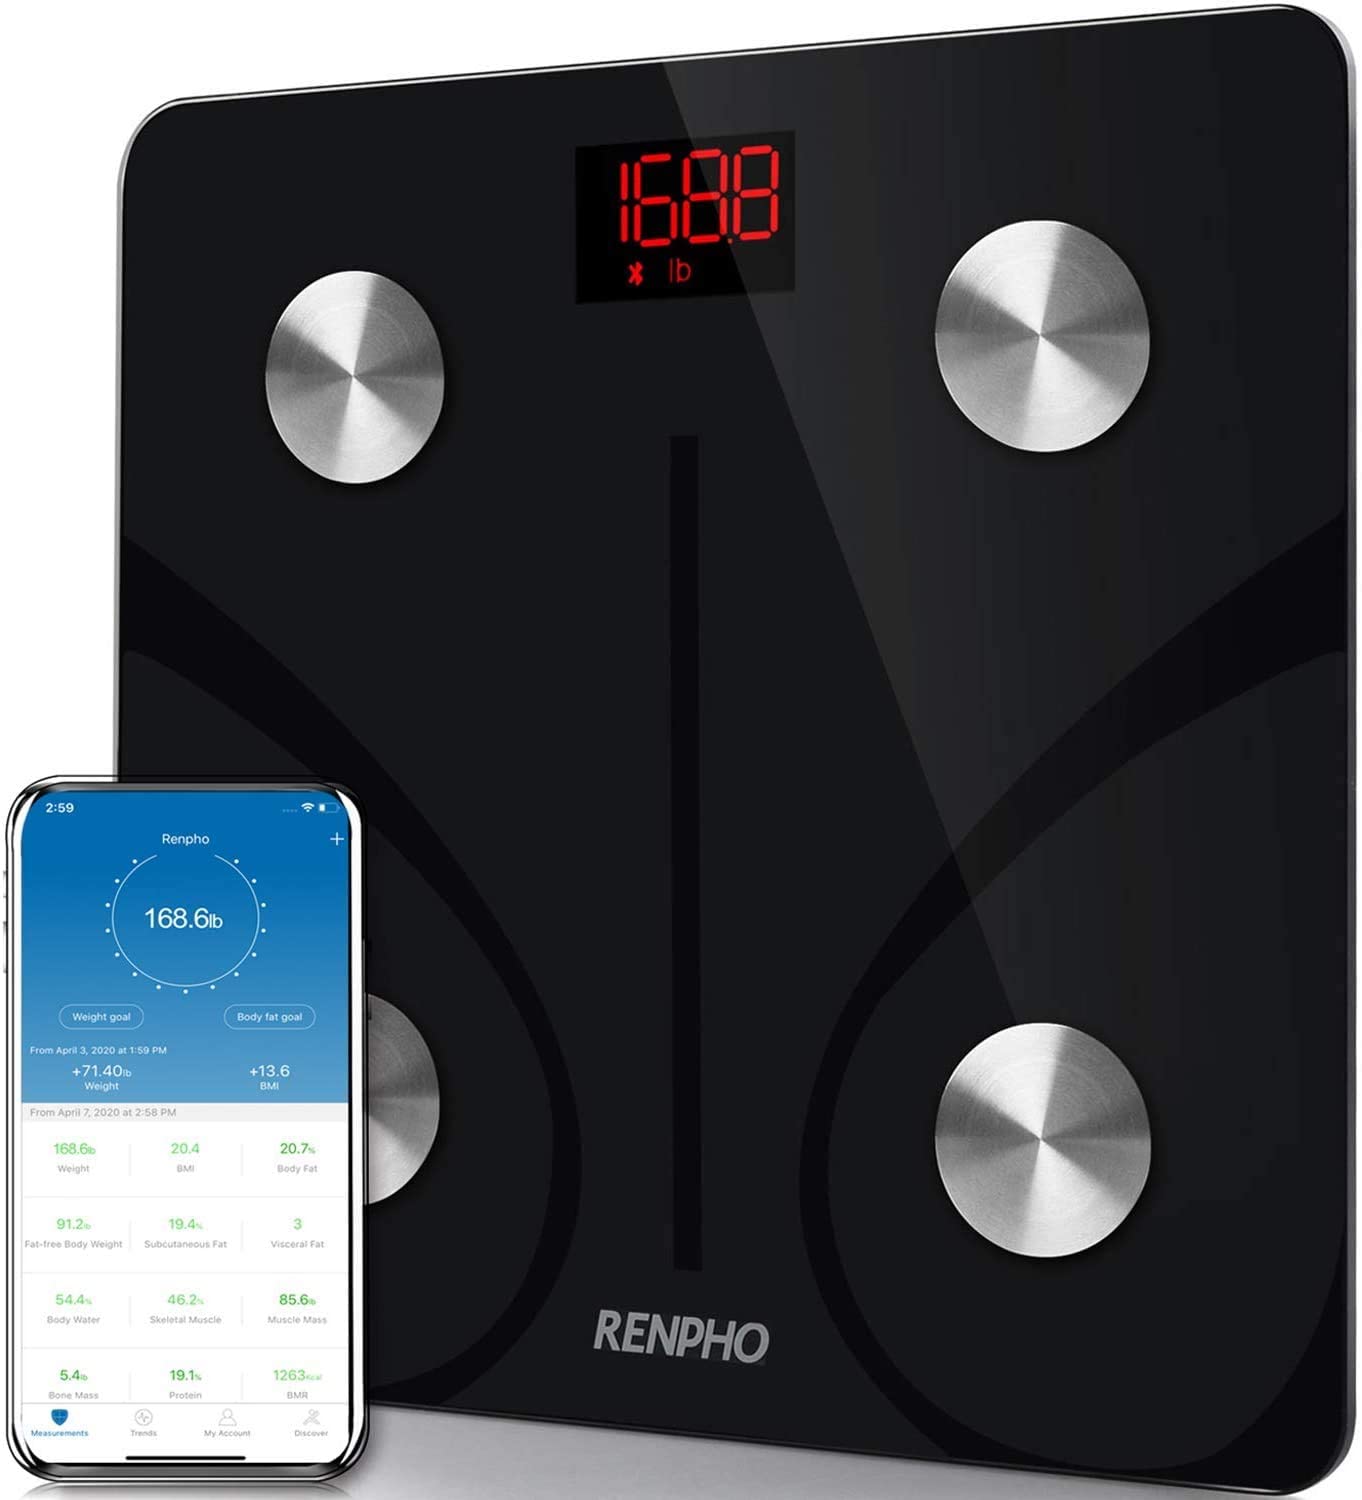 RENPHO Bluetooth Smart Body Fat Monitor Scale